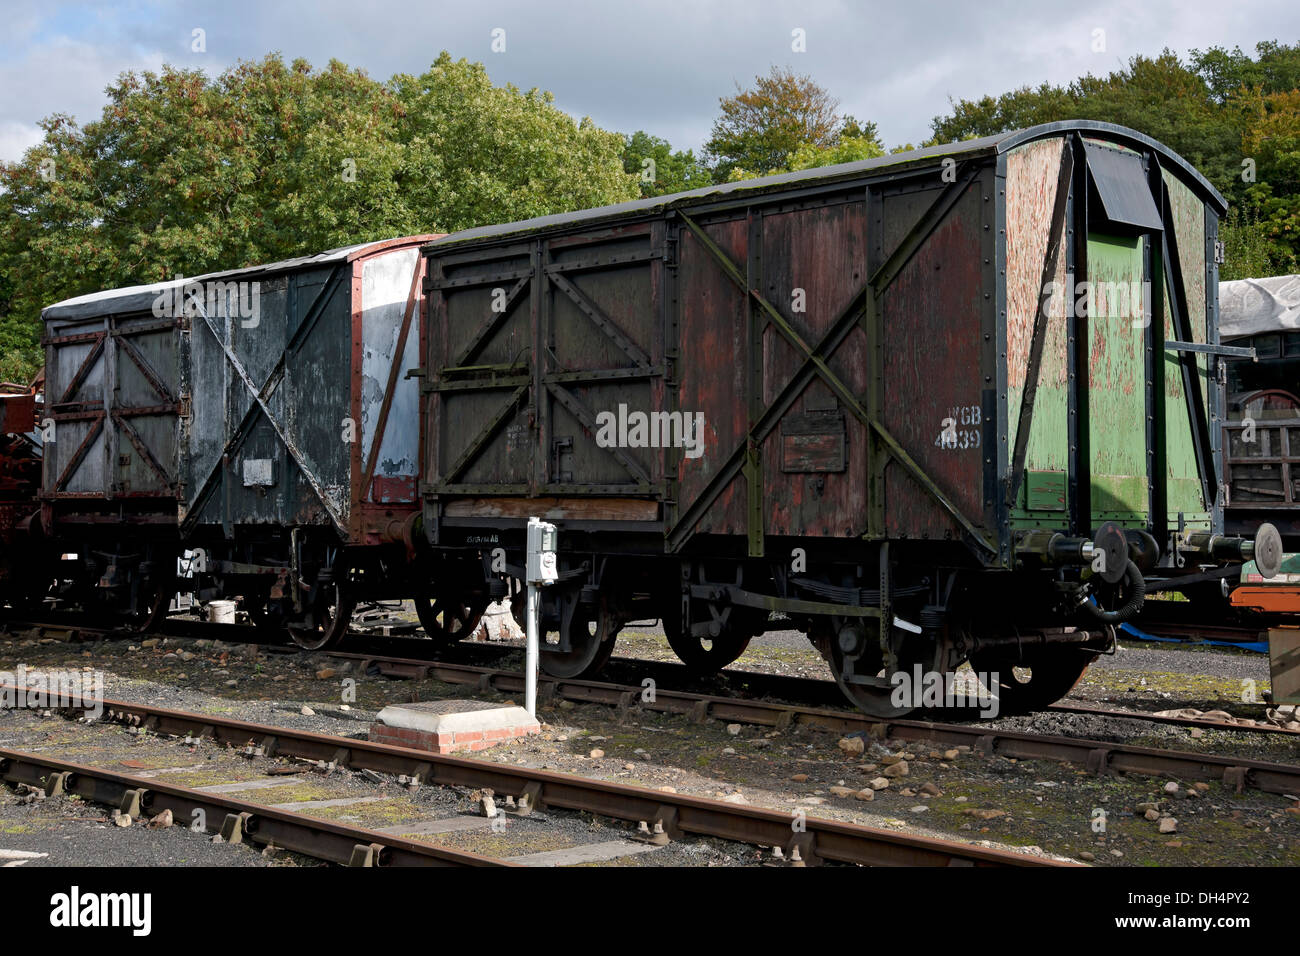 Old freight rail railway train wagons wagon North Yorkshire England UK United Kingdom GB Great Britain Stock Photo